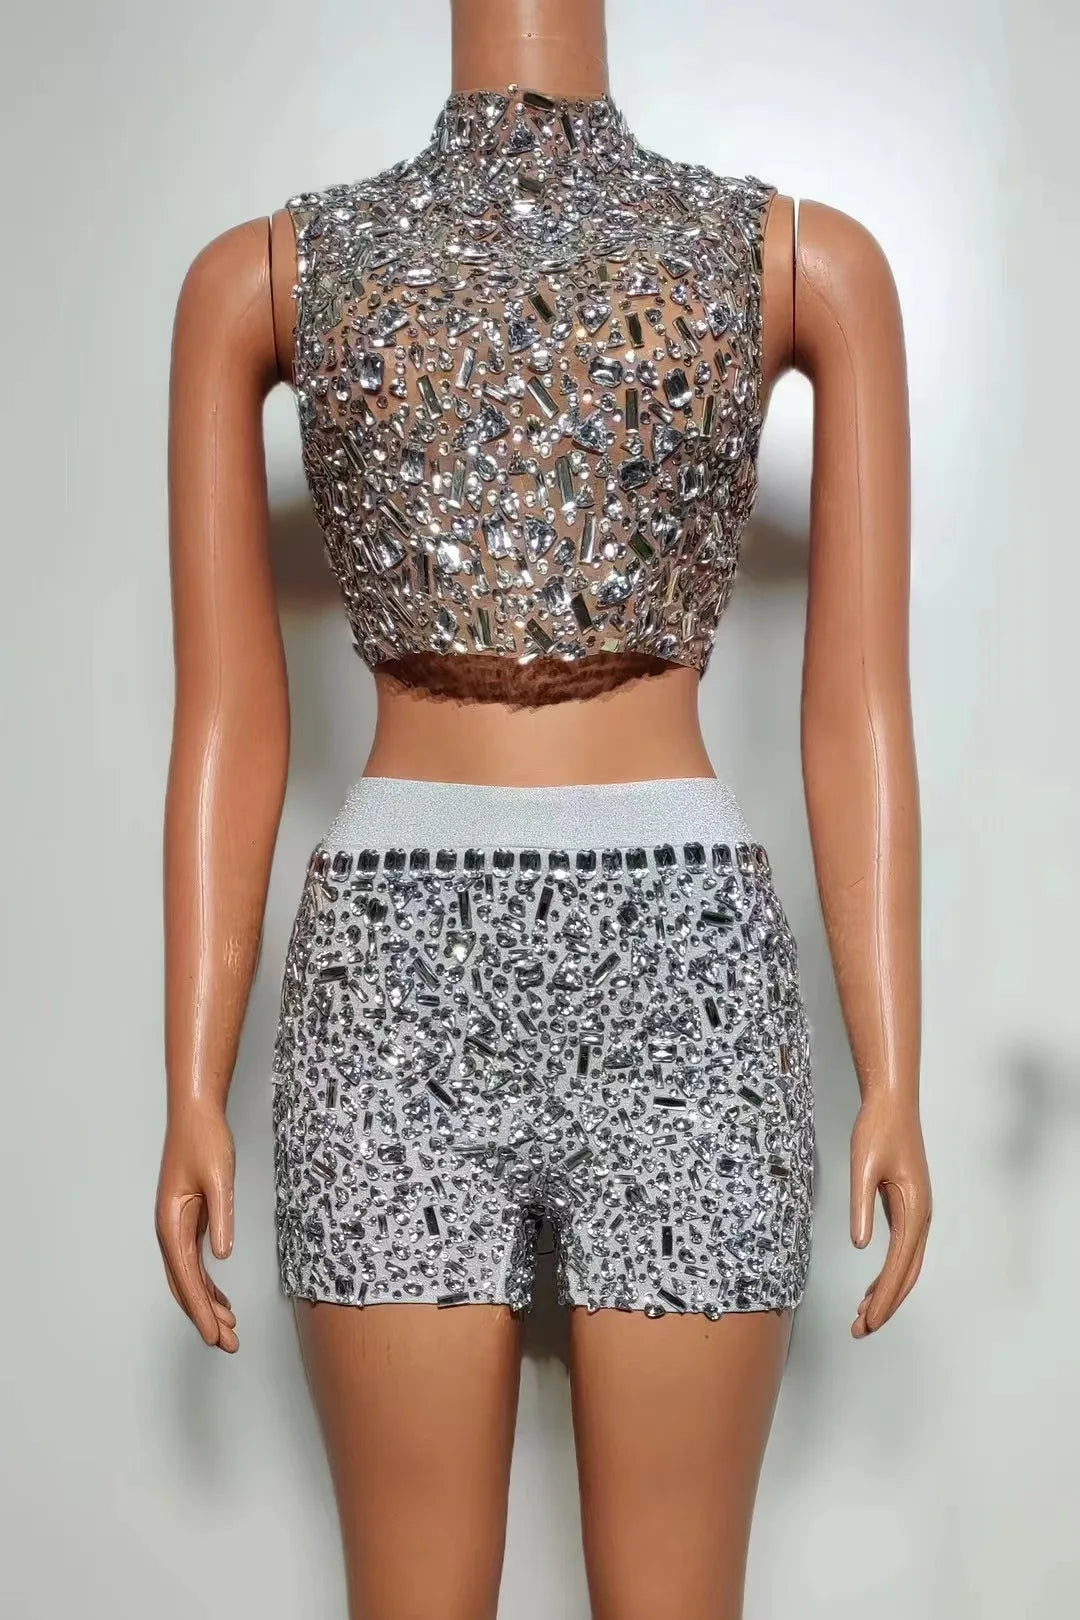 Luxurious Rhinestones Celebrate Evening Birthday Dress Crystals Top Short Skirt Two Pieces Set Performance Photoshoot Wear